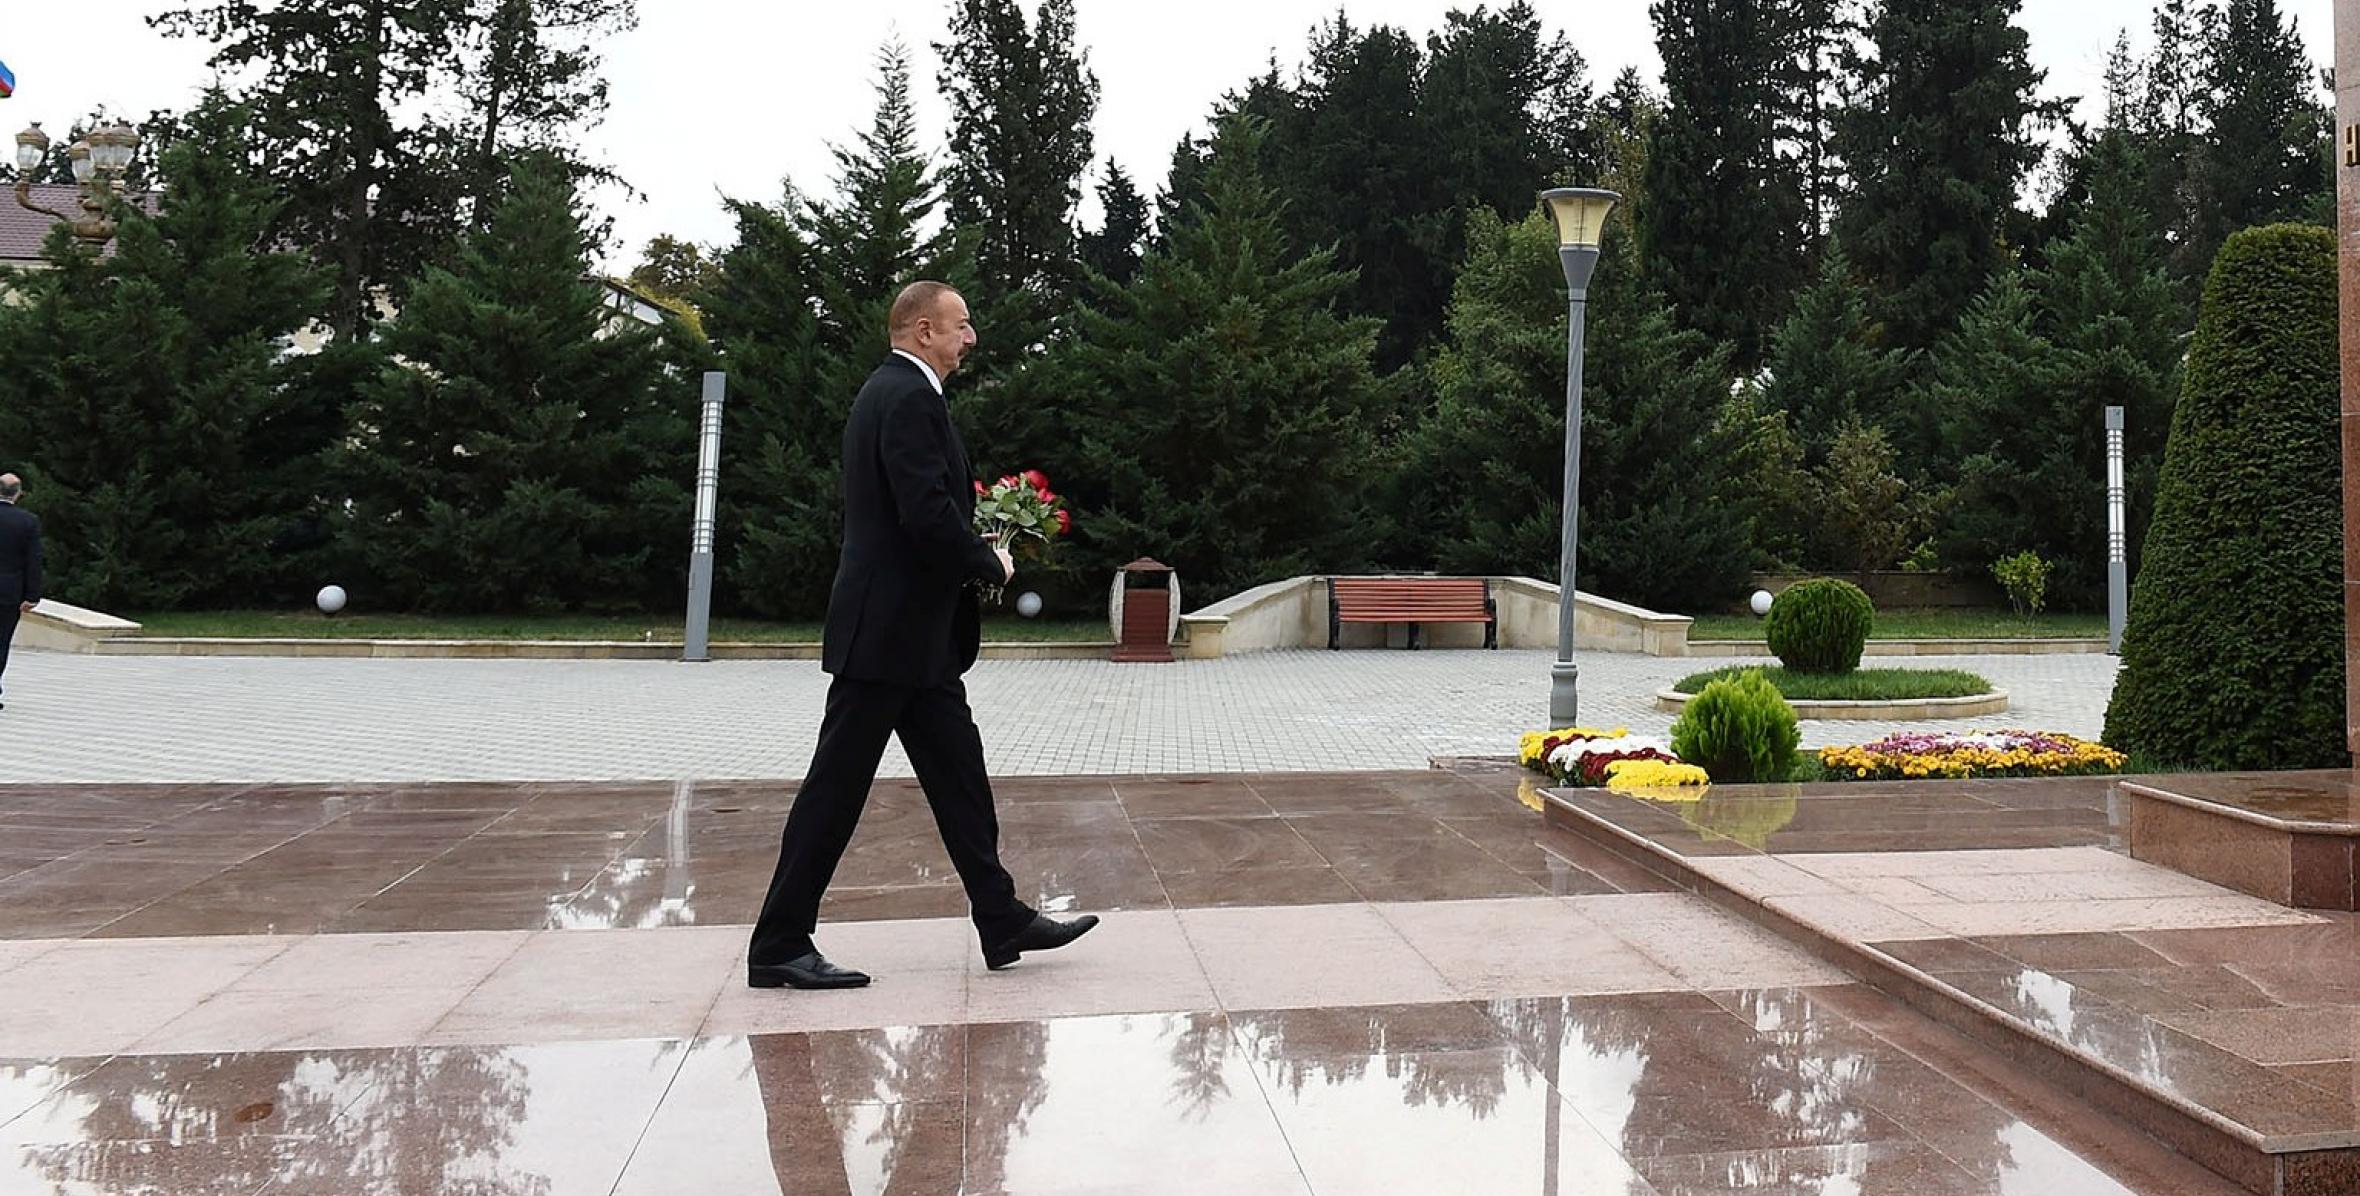 Ilham Aliyev arrived in Imishli district for visit